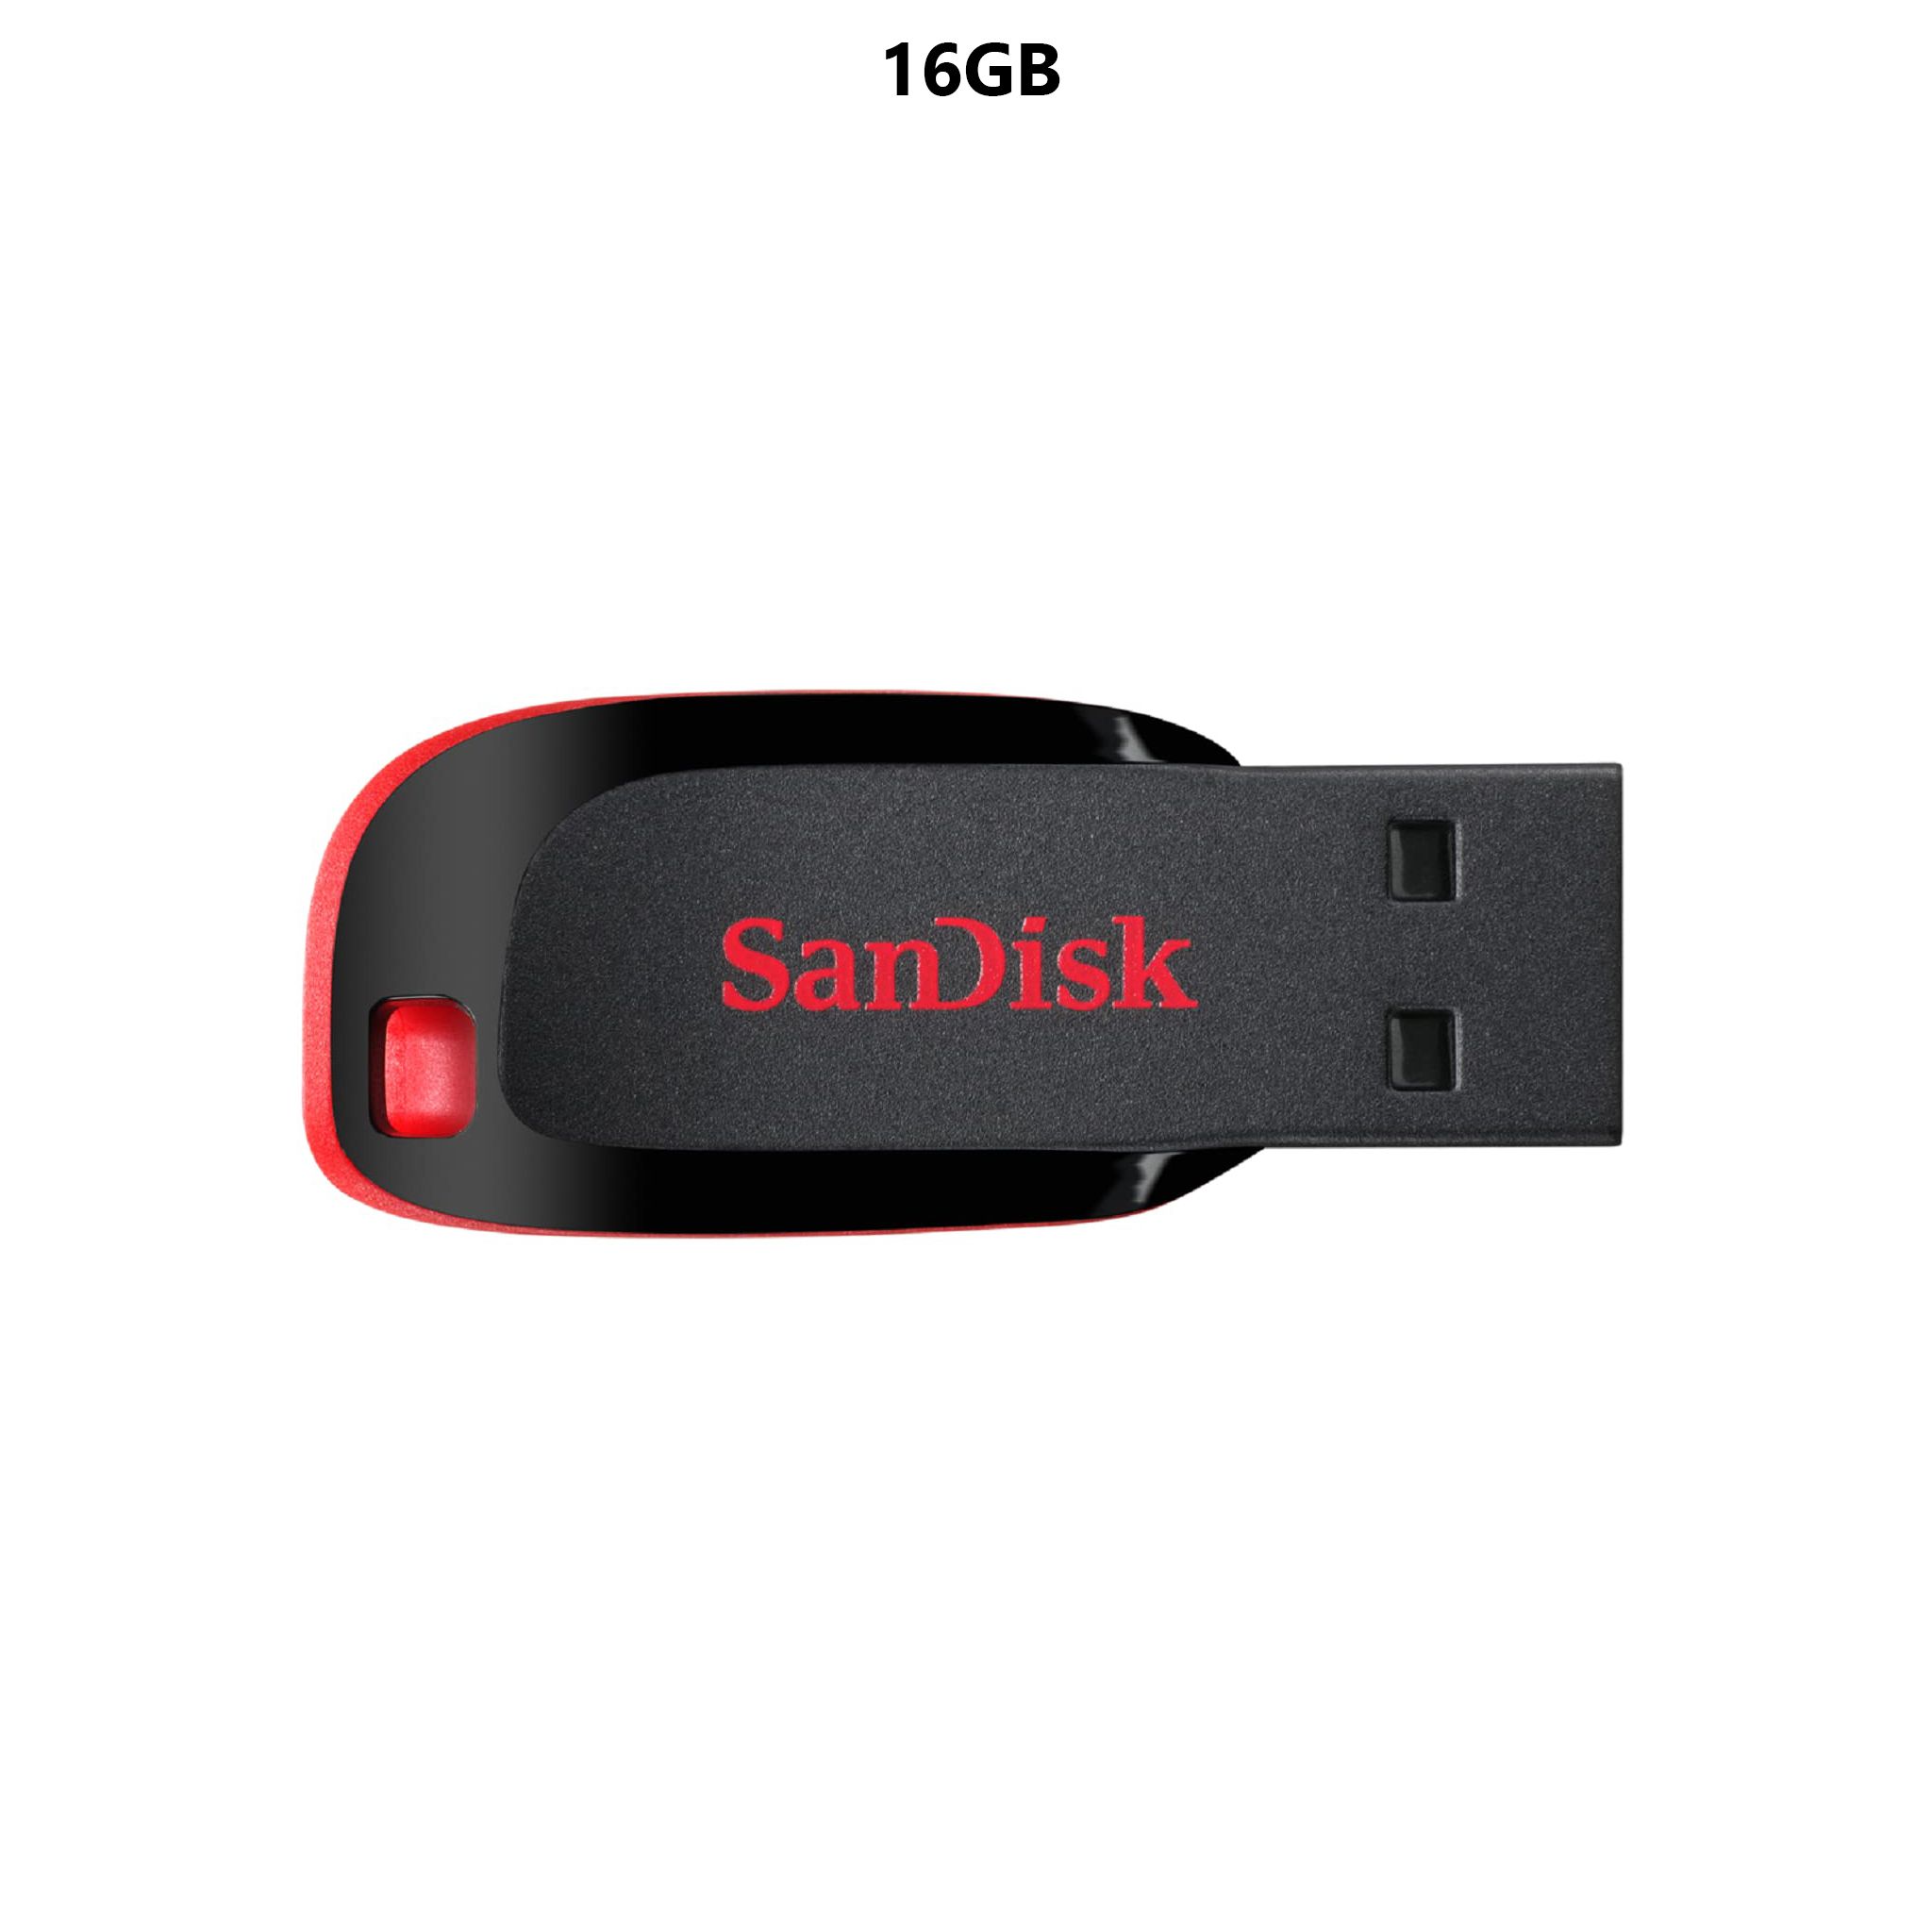 Sandisk USB Flash drive - 1Sell